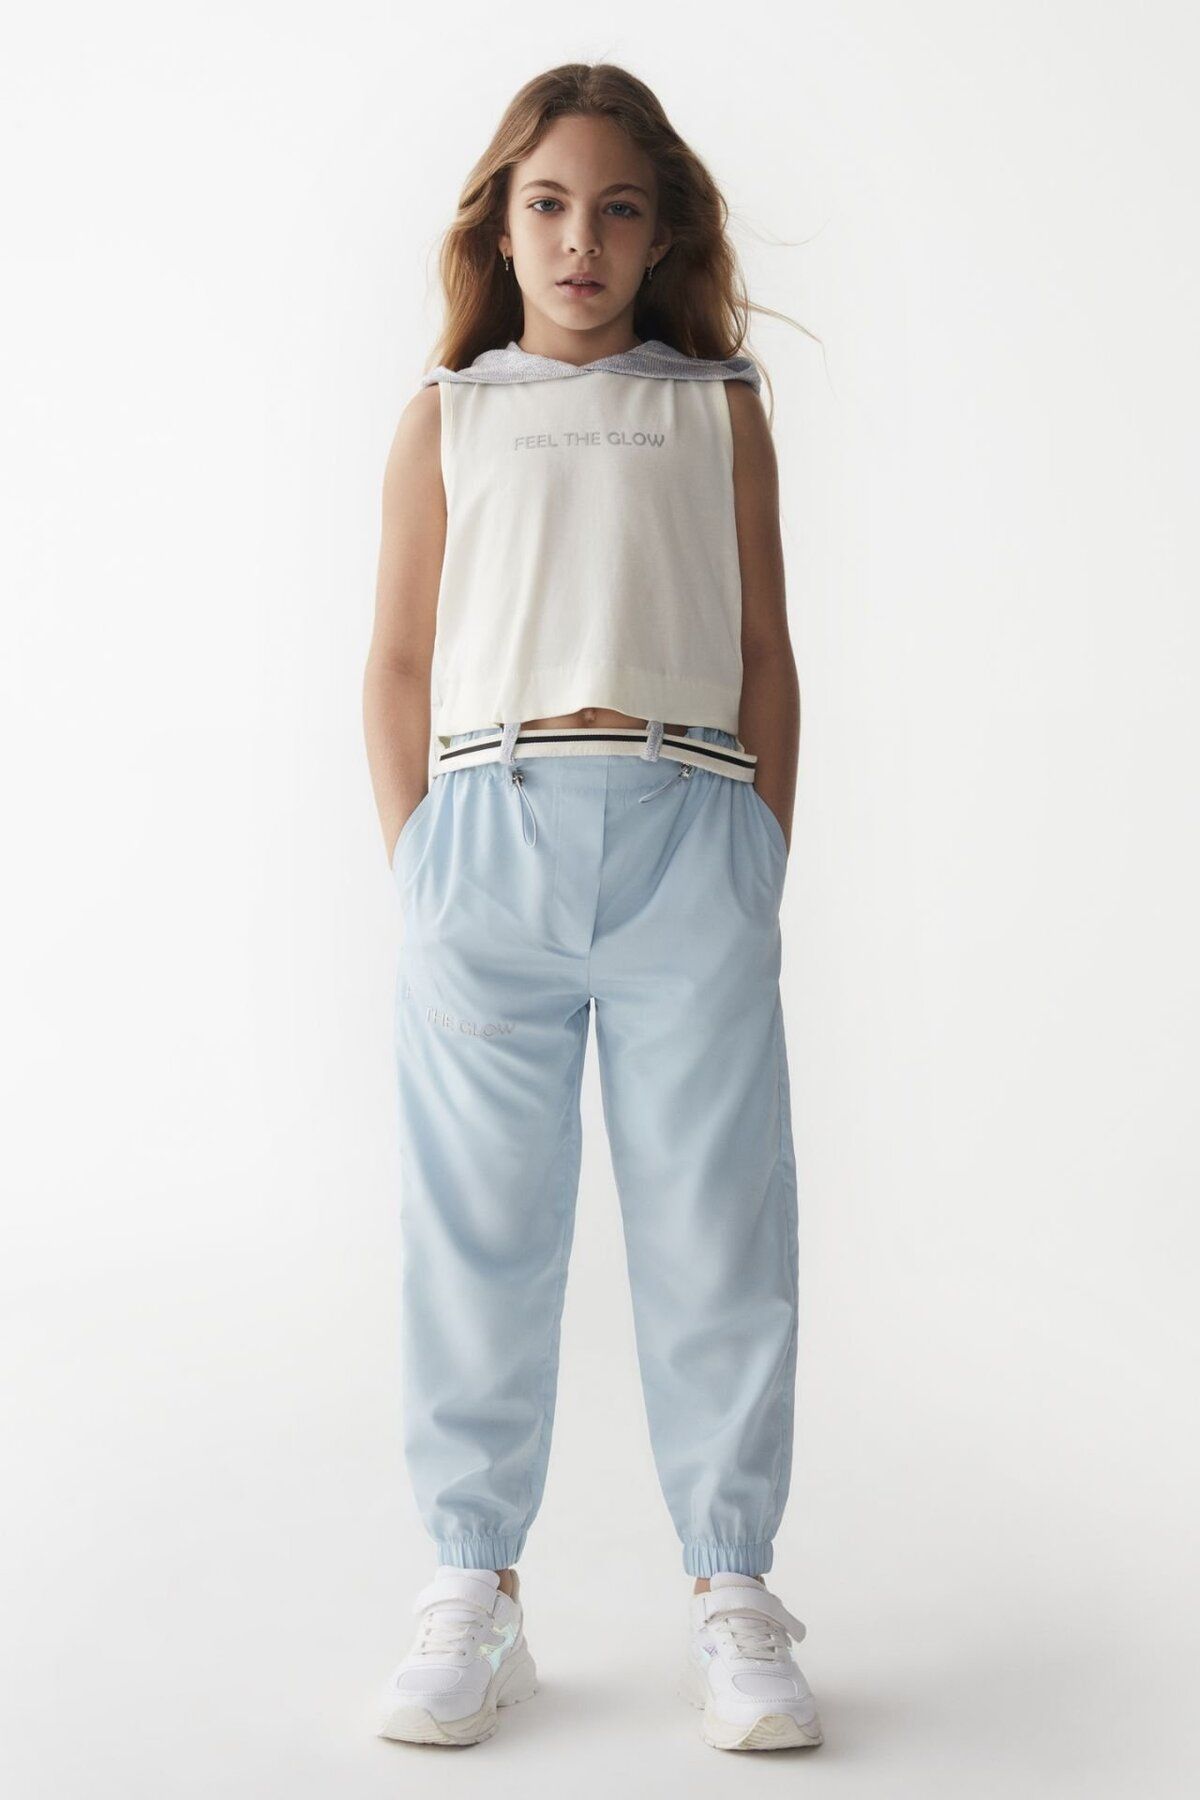 Nk Kids Nk Mavi Bel ve Paça Lastikli Pantolon ( 8-14 Size )